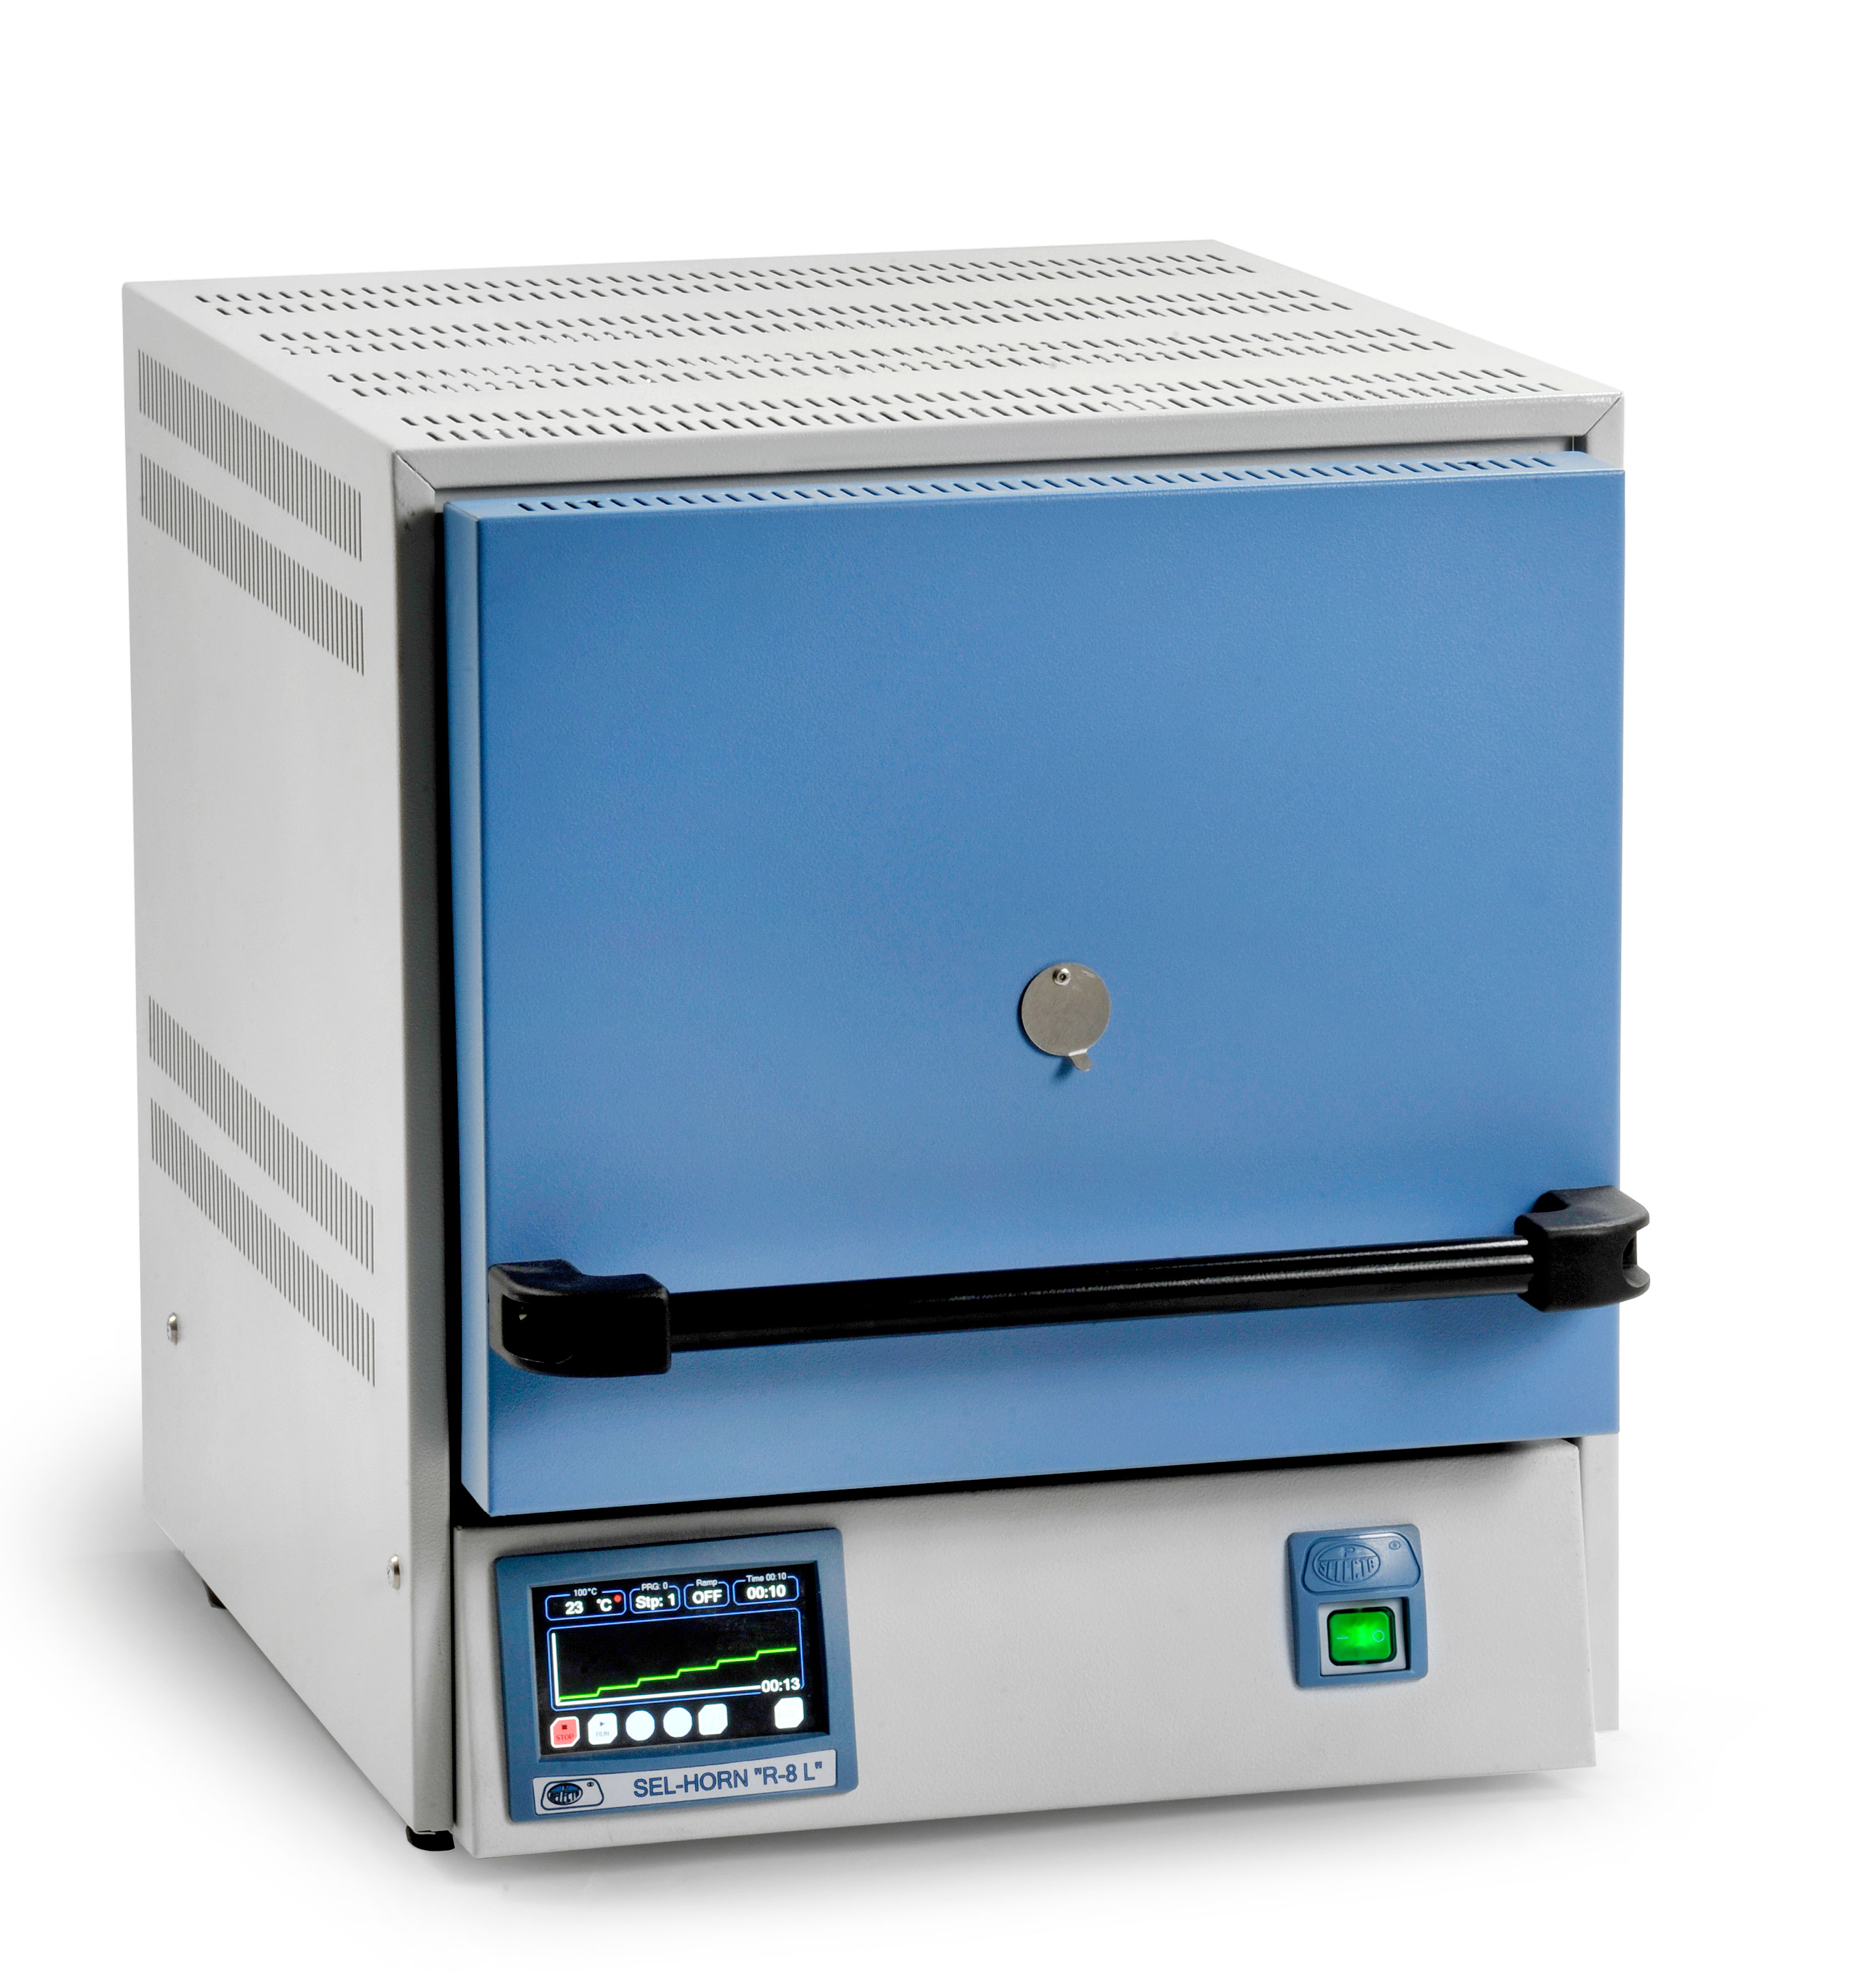 Hornos de mufla eléctrico 'R-8 L' regulable por pantalla táctil TFT hasta 1100 °C. Precisión ±2 °C. Capacidad 8L. Dim ext AnxAlxPr (mm): 340x430x470. J.P. SELECTA.